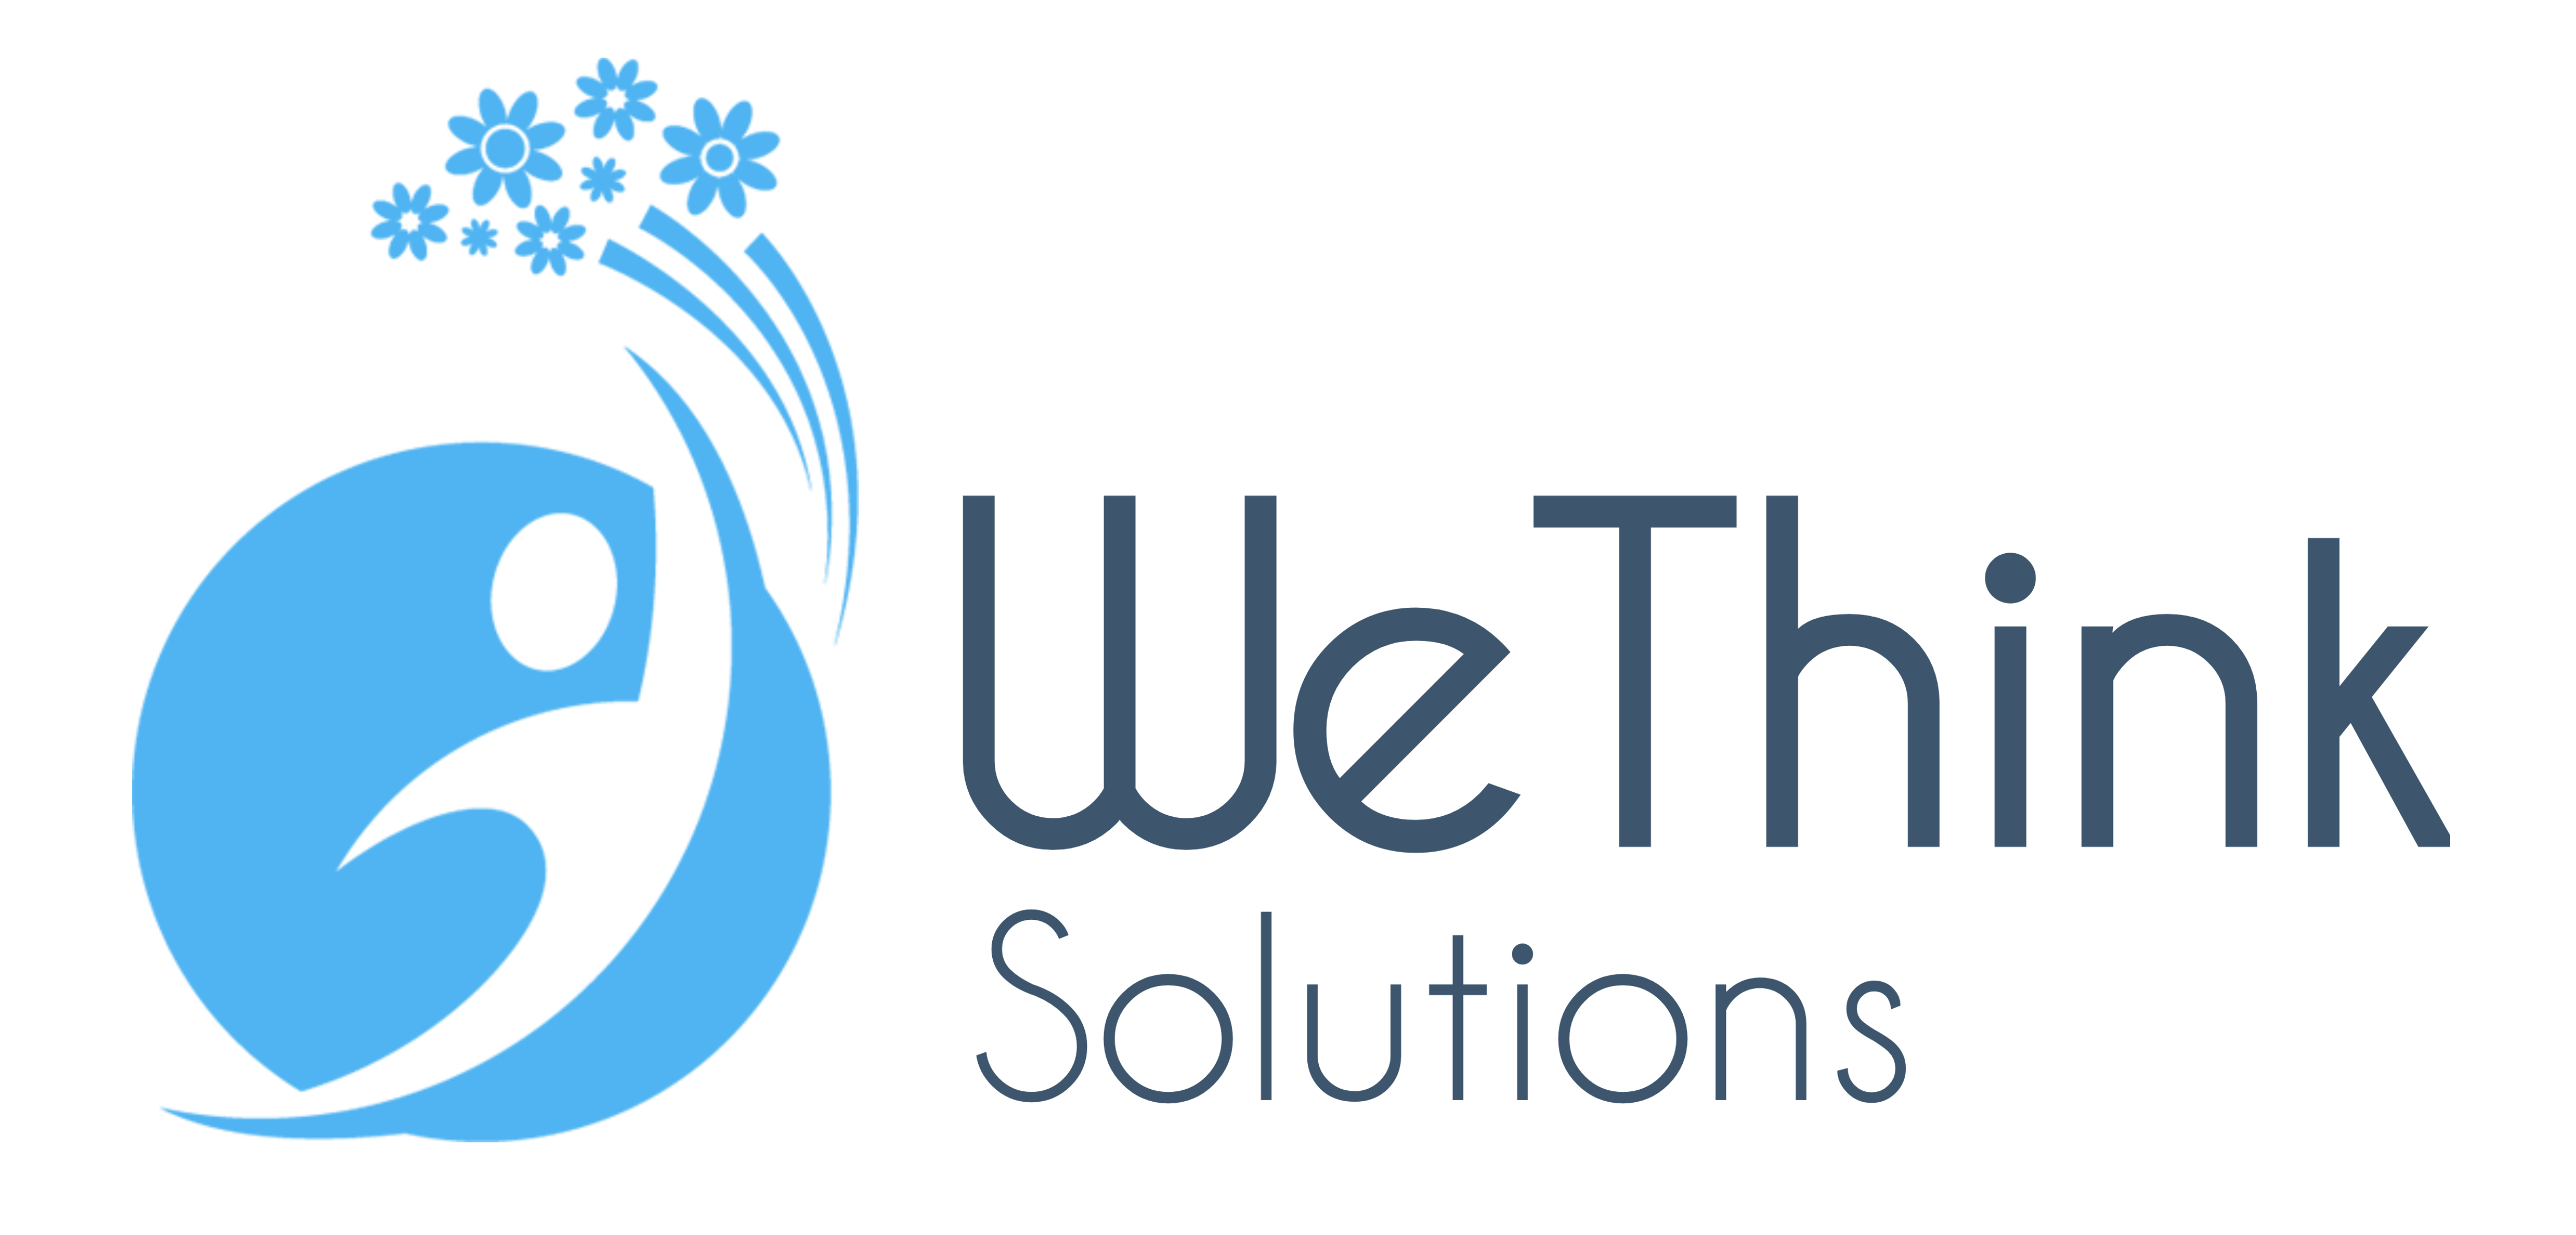 WeThink-Solutions logo